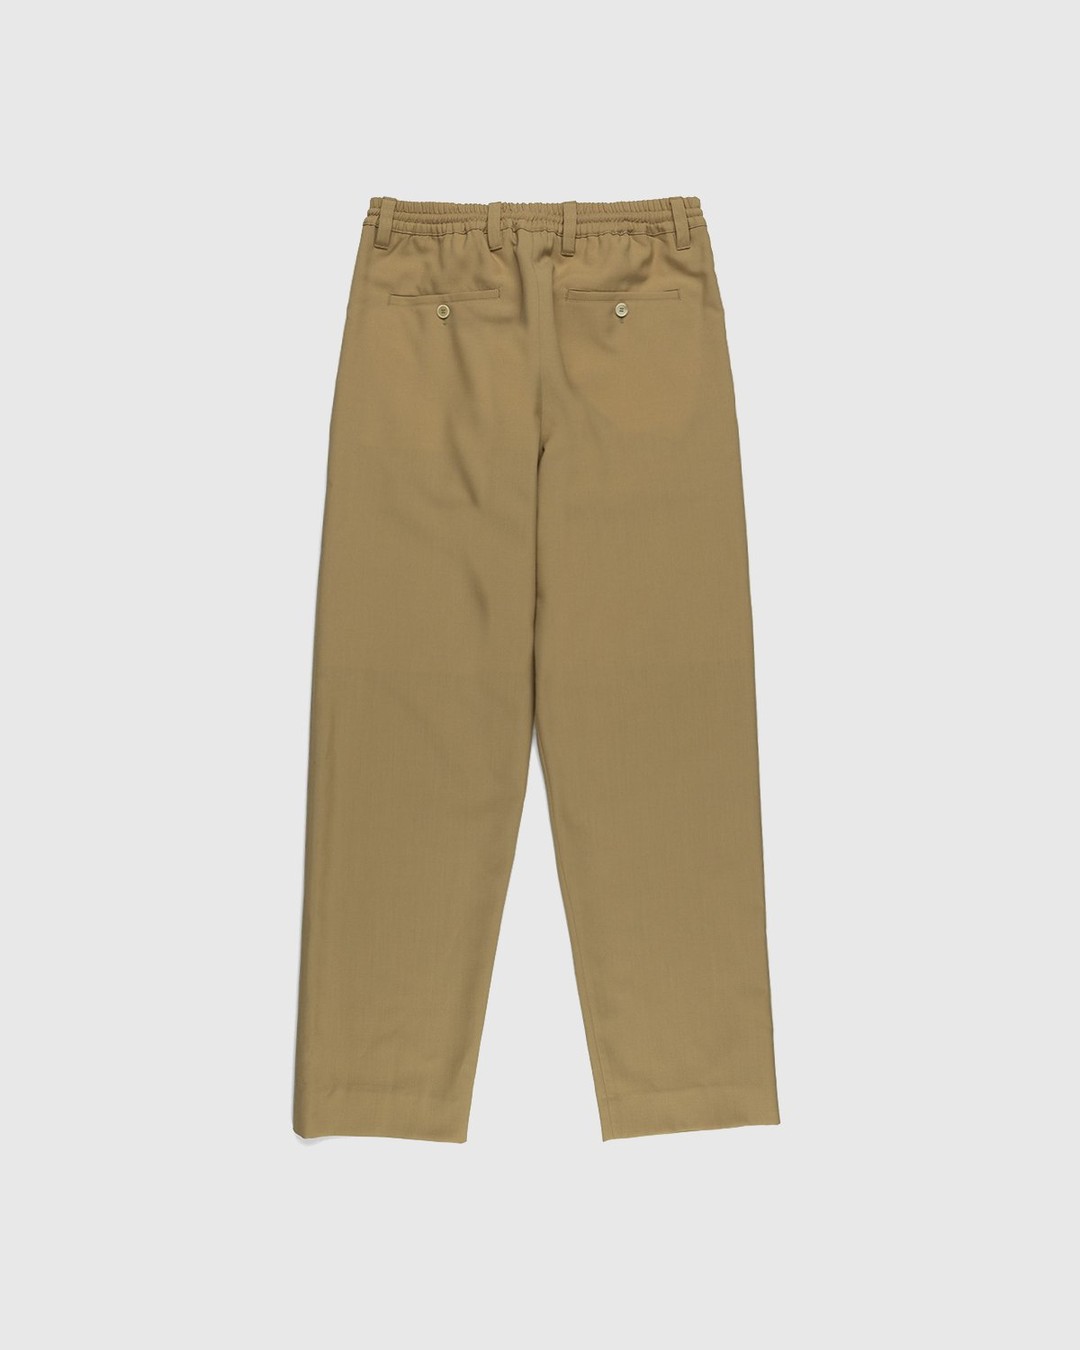 Marni – Tropical Wool Trousers Dijon - Trousers - Brown - Image 2